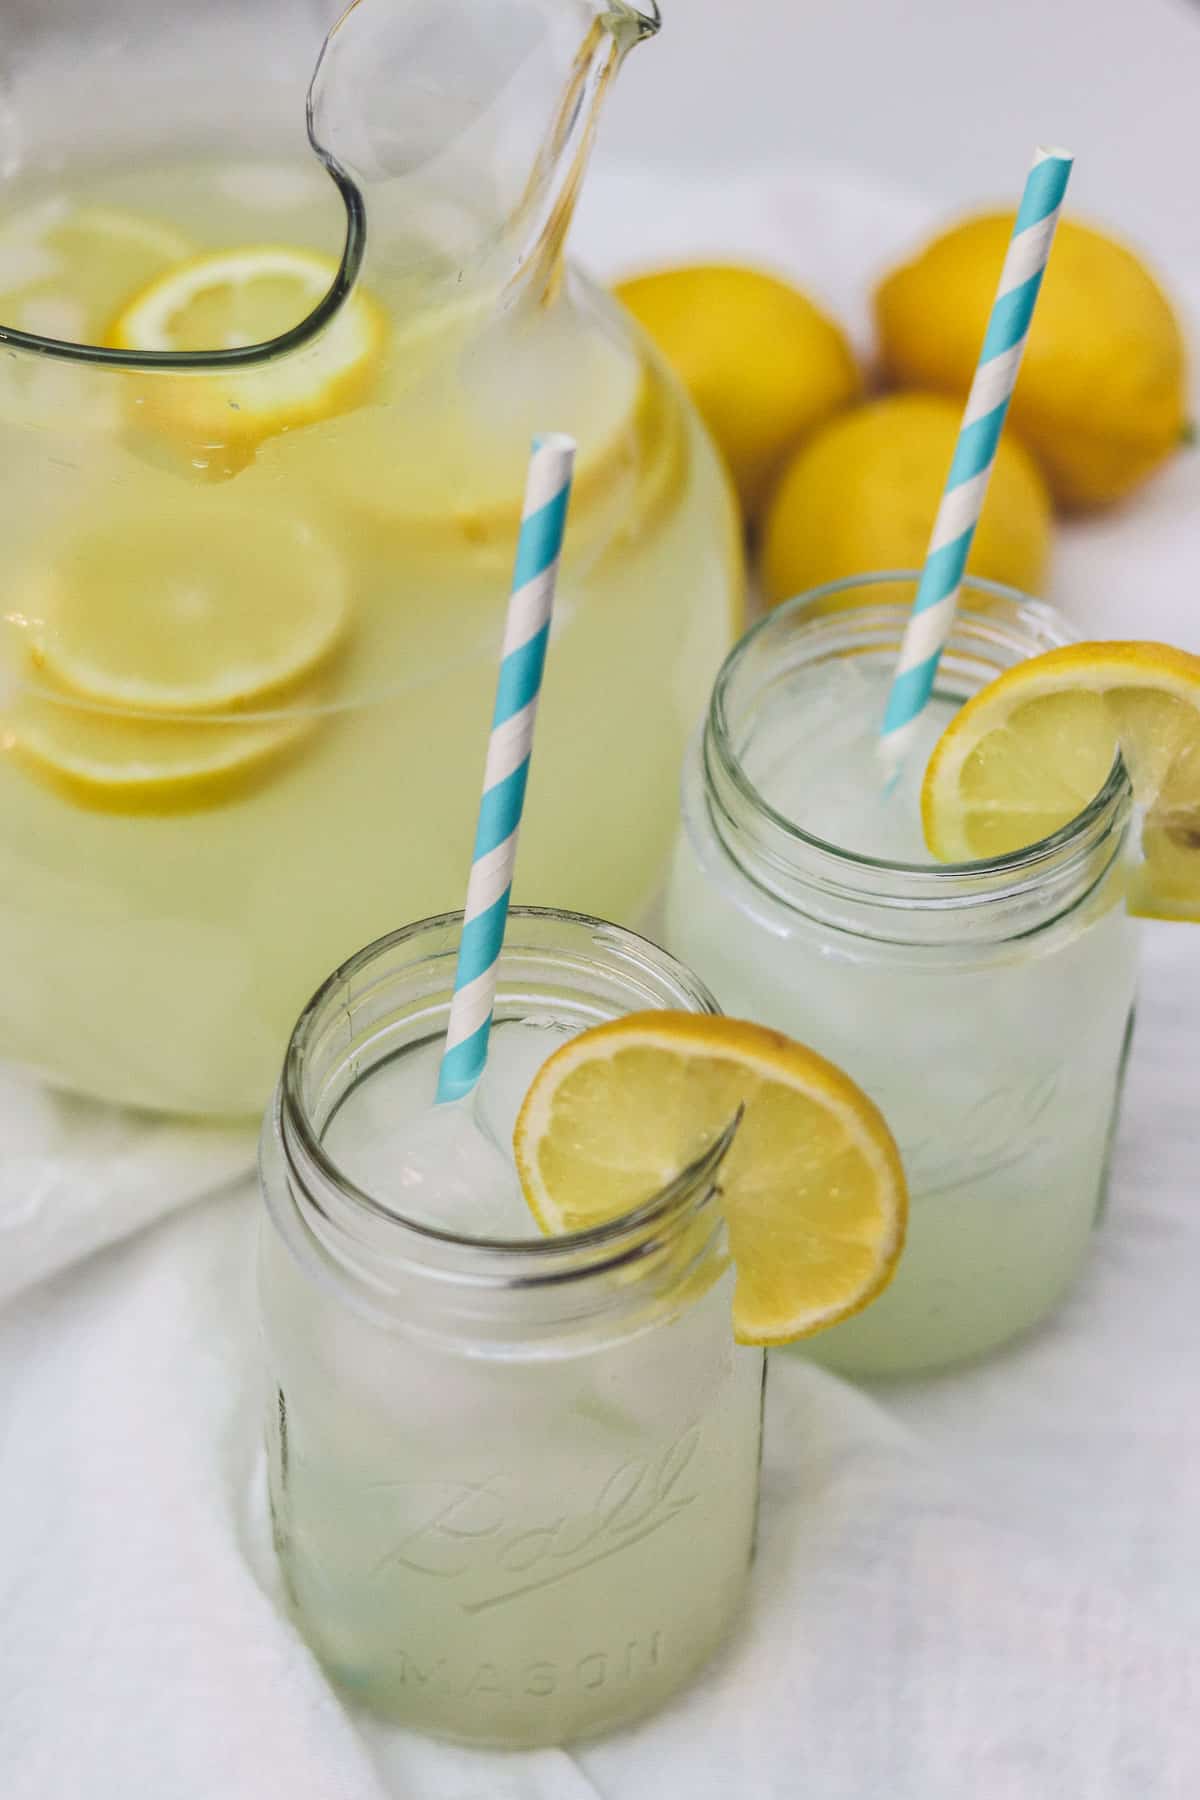 sugar free lemonade in mason jars with pitcher and lemons